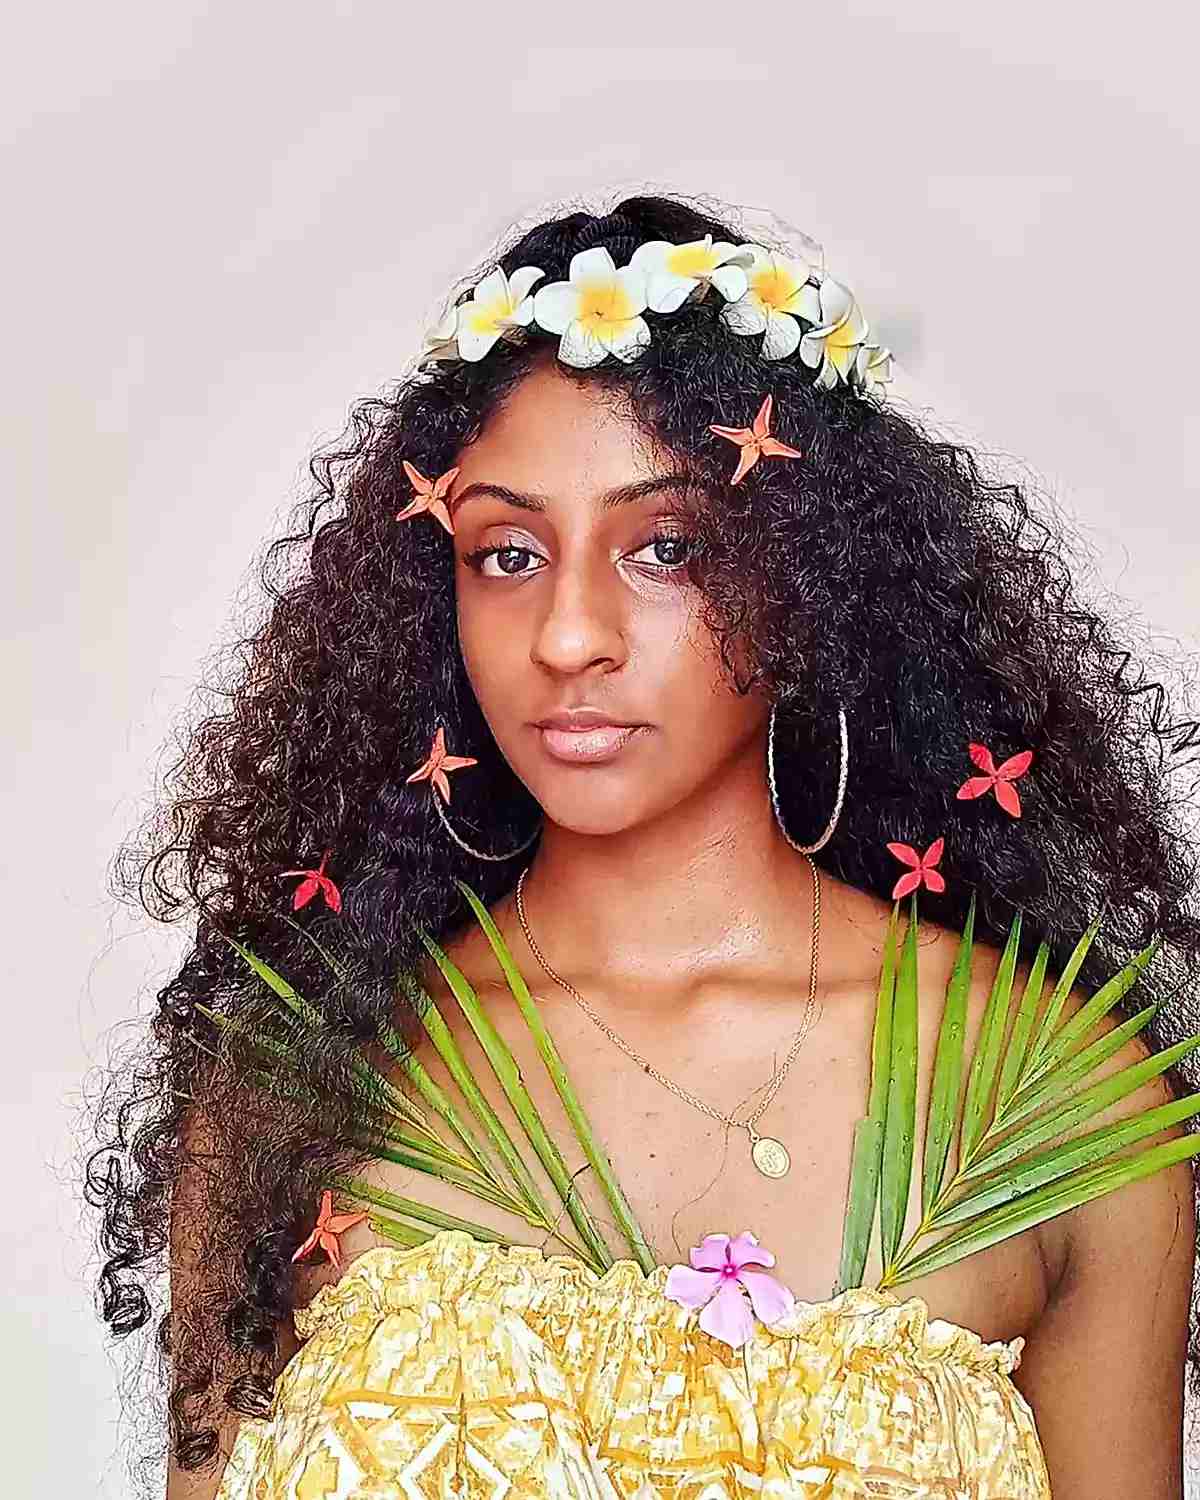 Hawaiian-Style Curly Long Hair with Flowers